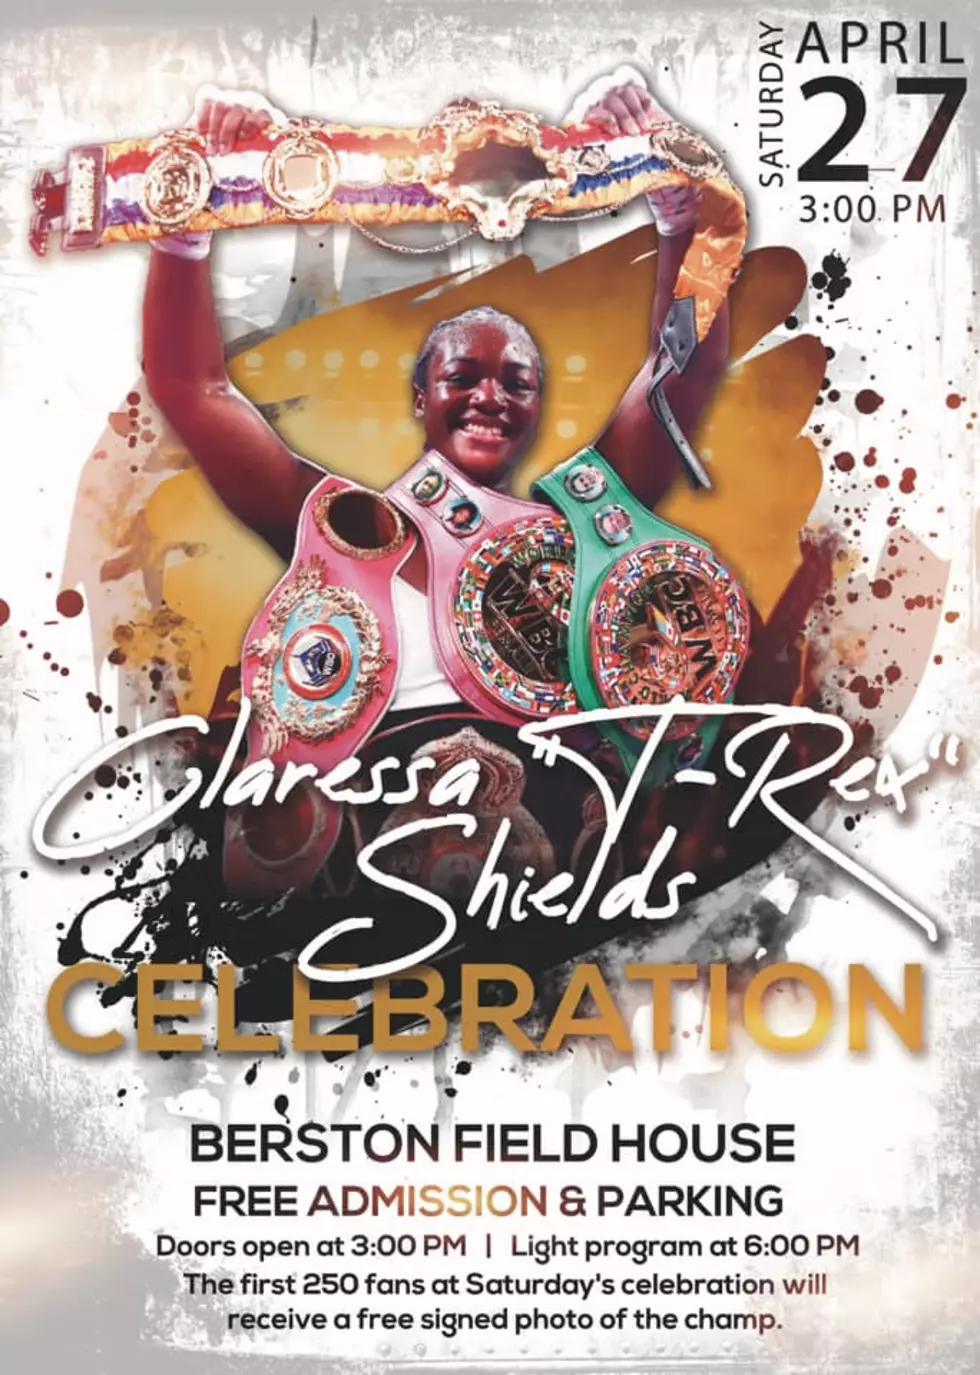 Claressa Shields Celebration Happening Saturday At Berston Field House